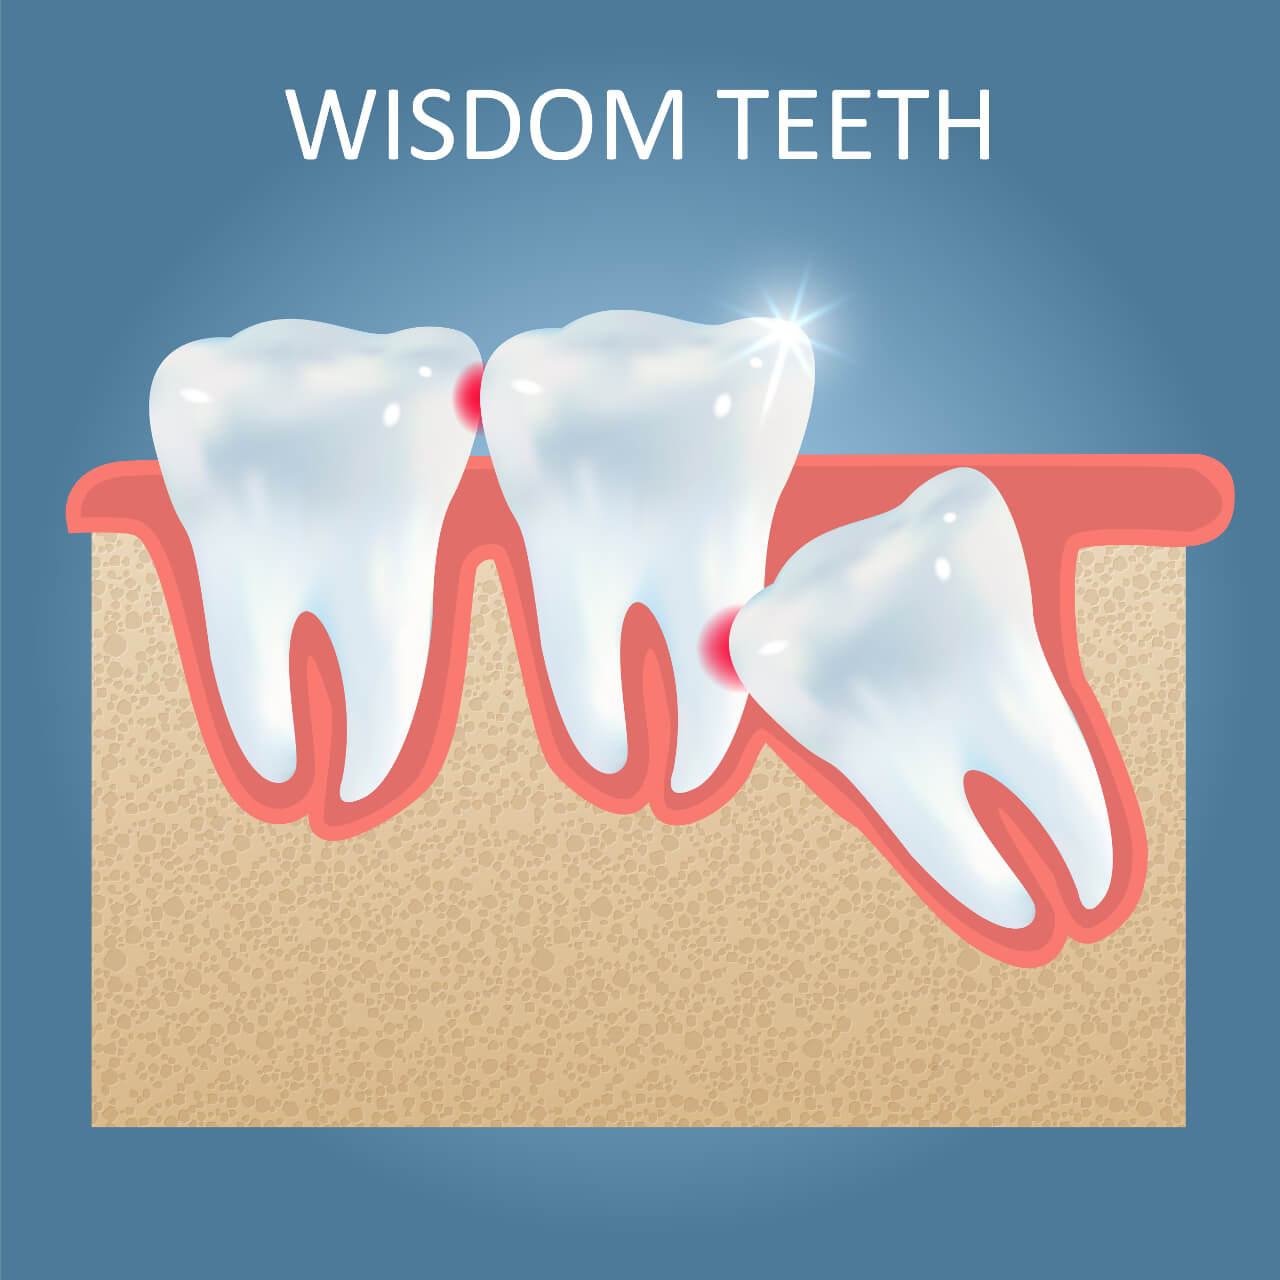 wisdom tooth illustration